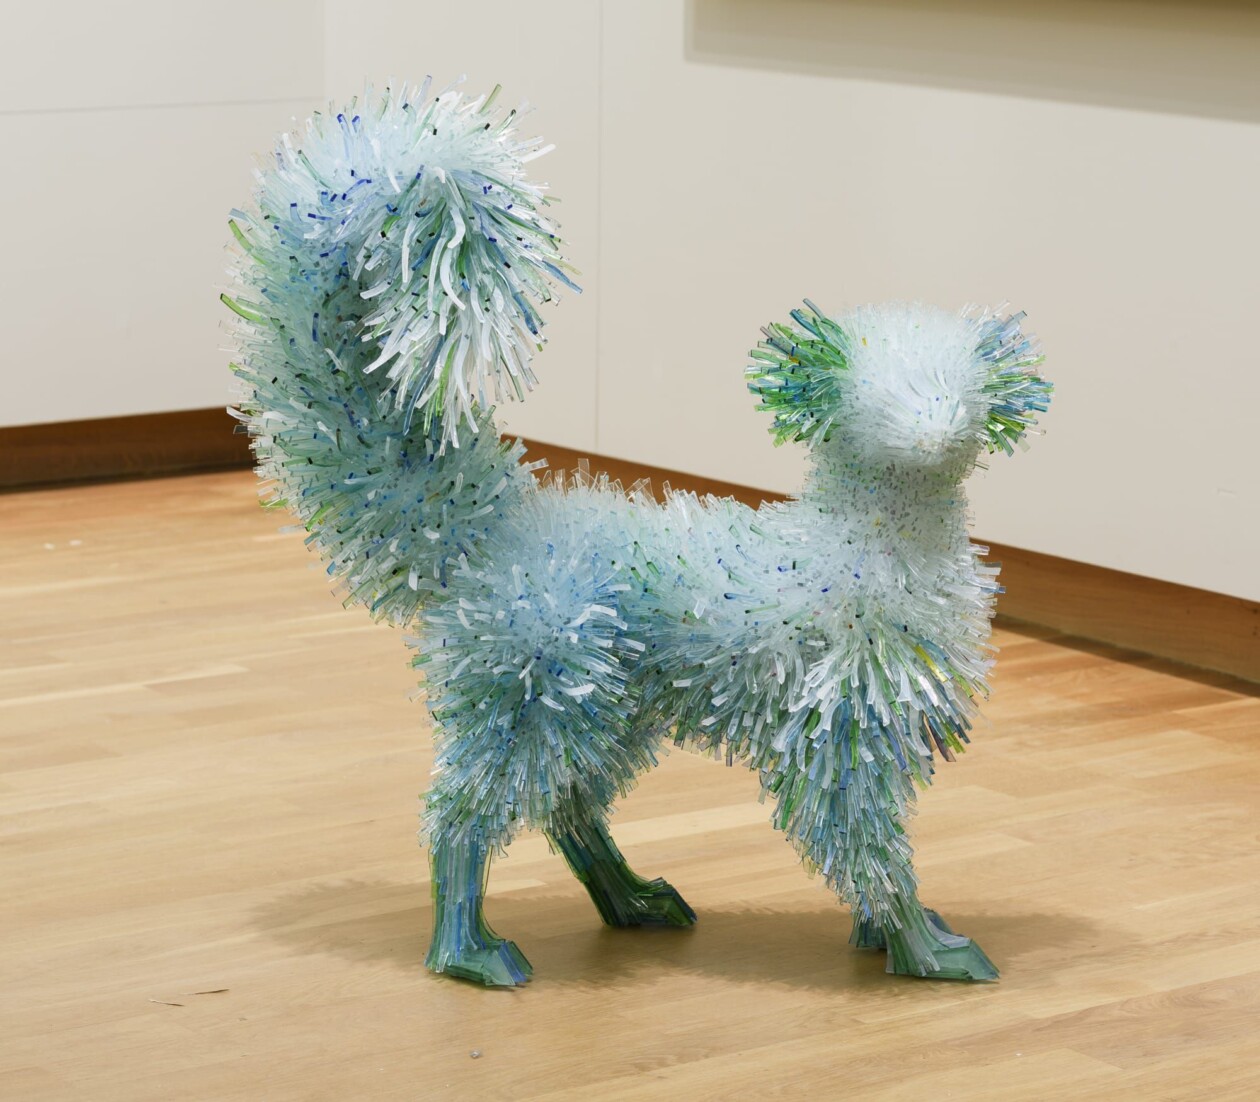 Shattered Glass Animal Sculptures By Polish Artist Marta Klonowska (11)